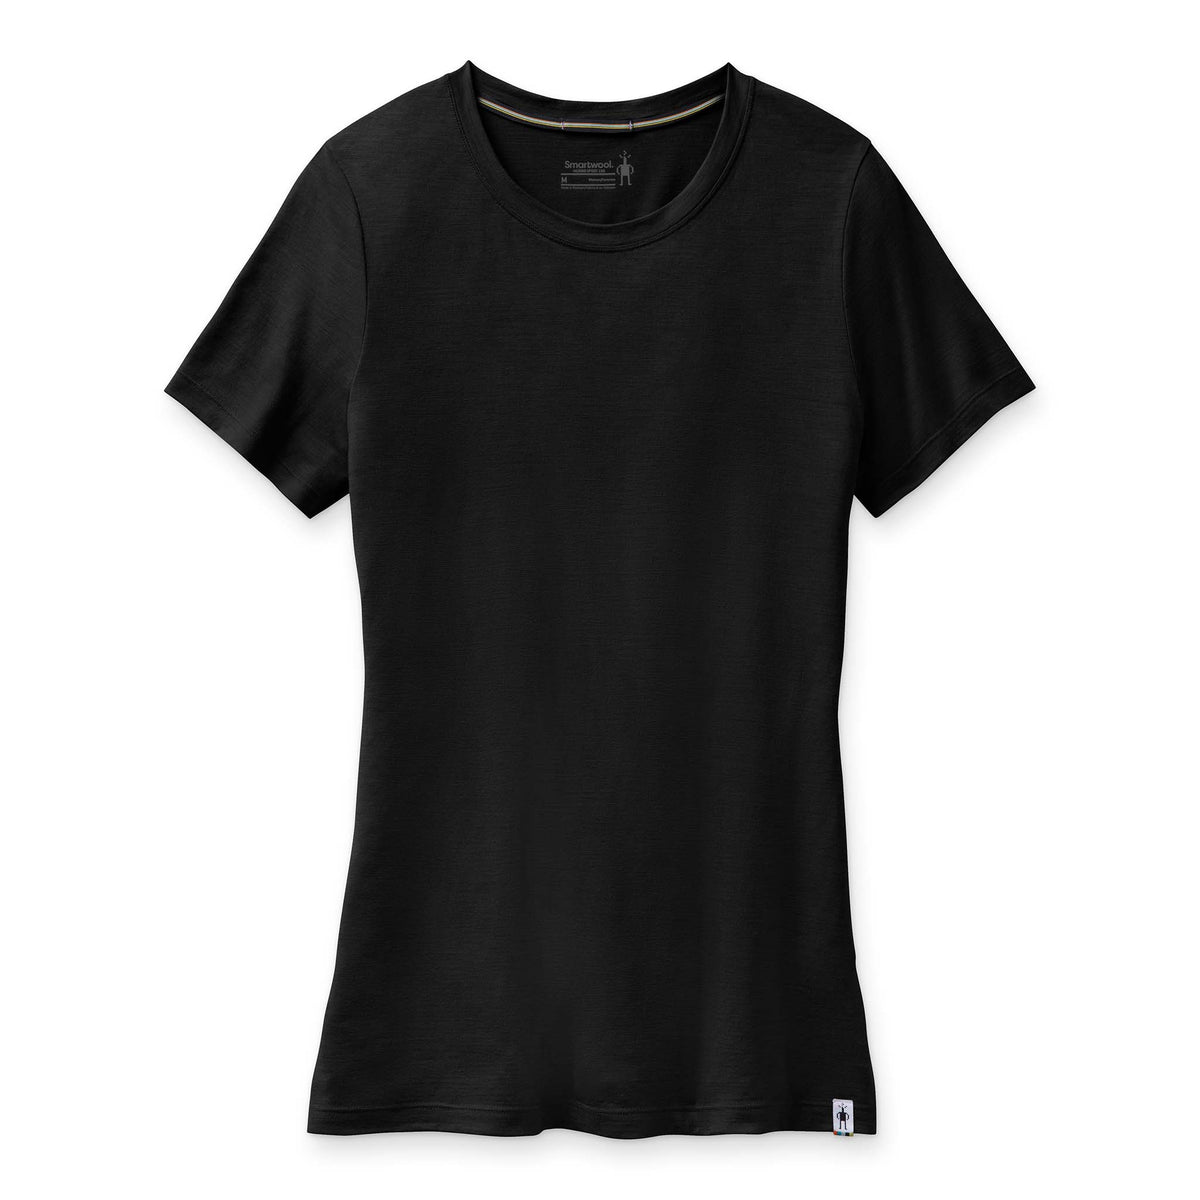 Smartwool Merino Sport 150 T-shirt noir femme